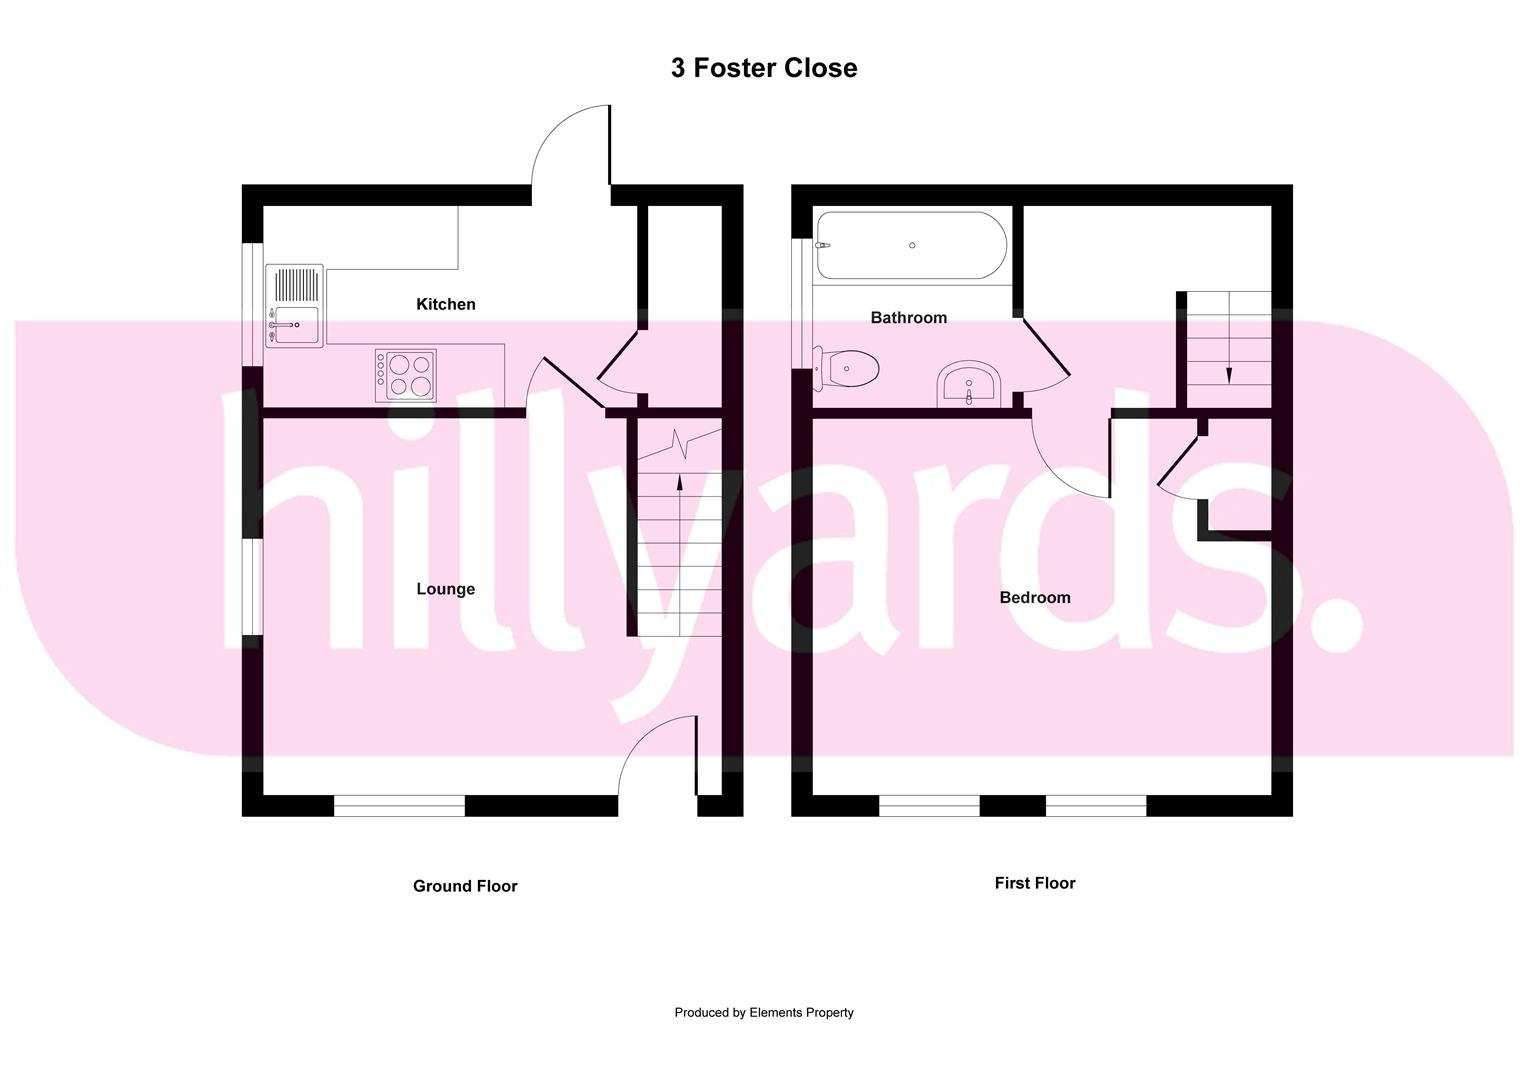 1 Bedrooms  to rent in Foster Close, Aylesbury HP20